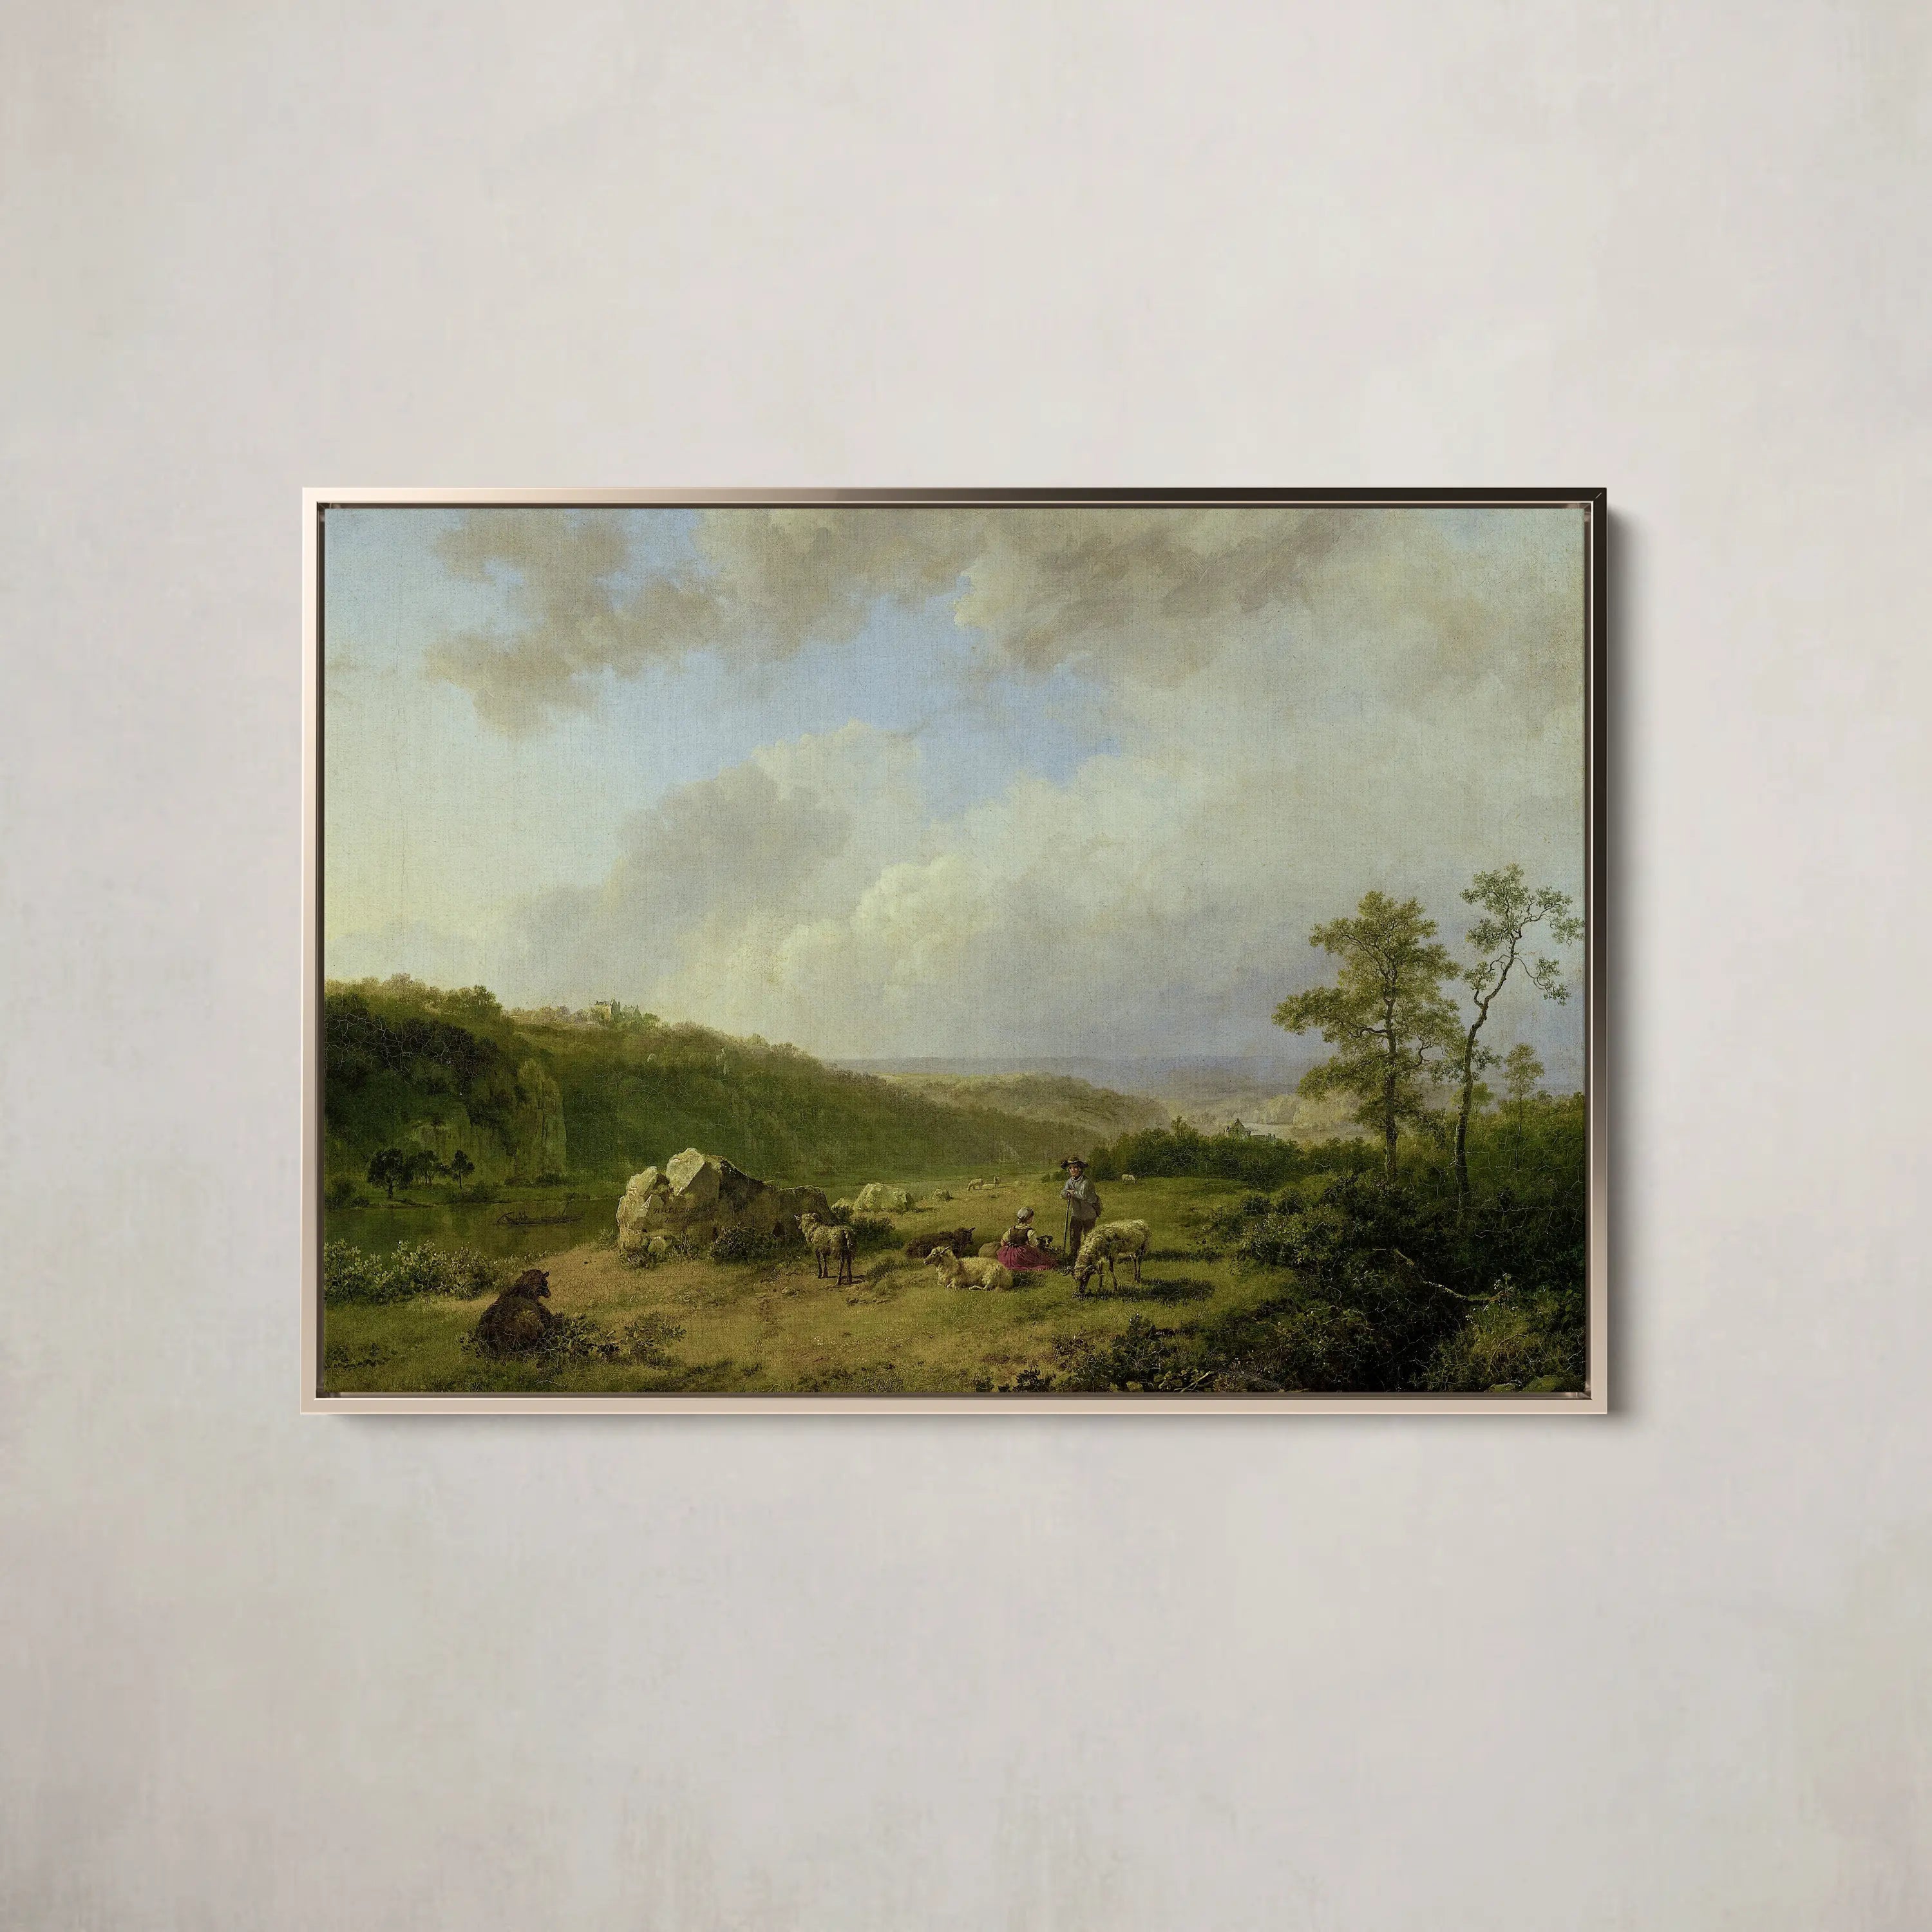 Landscape with a Rainstorm Threatening (1825 - 1829) by Barend Cornelis Koekkoek